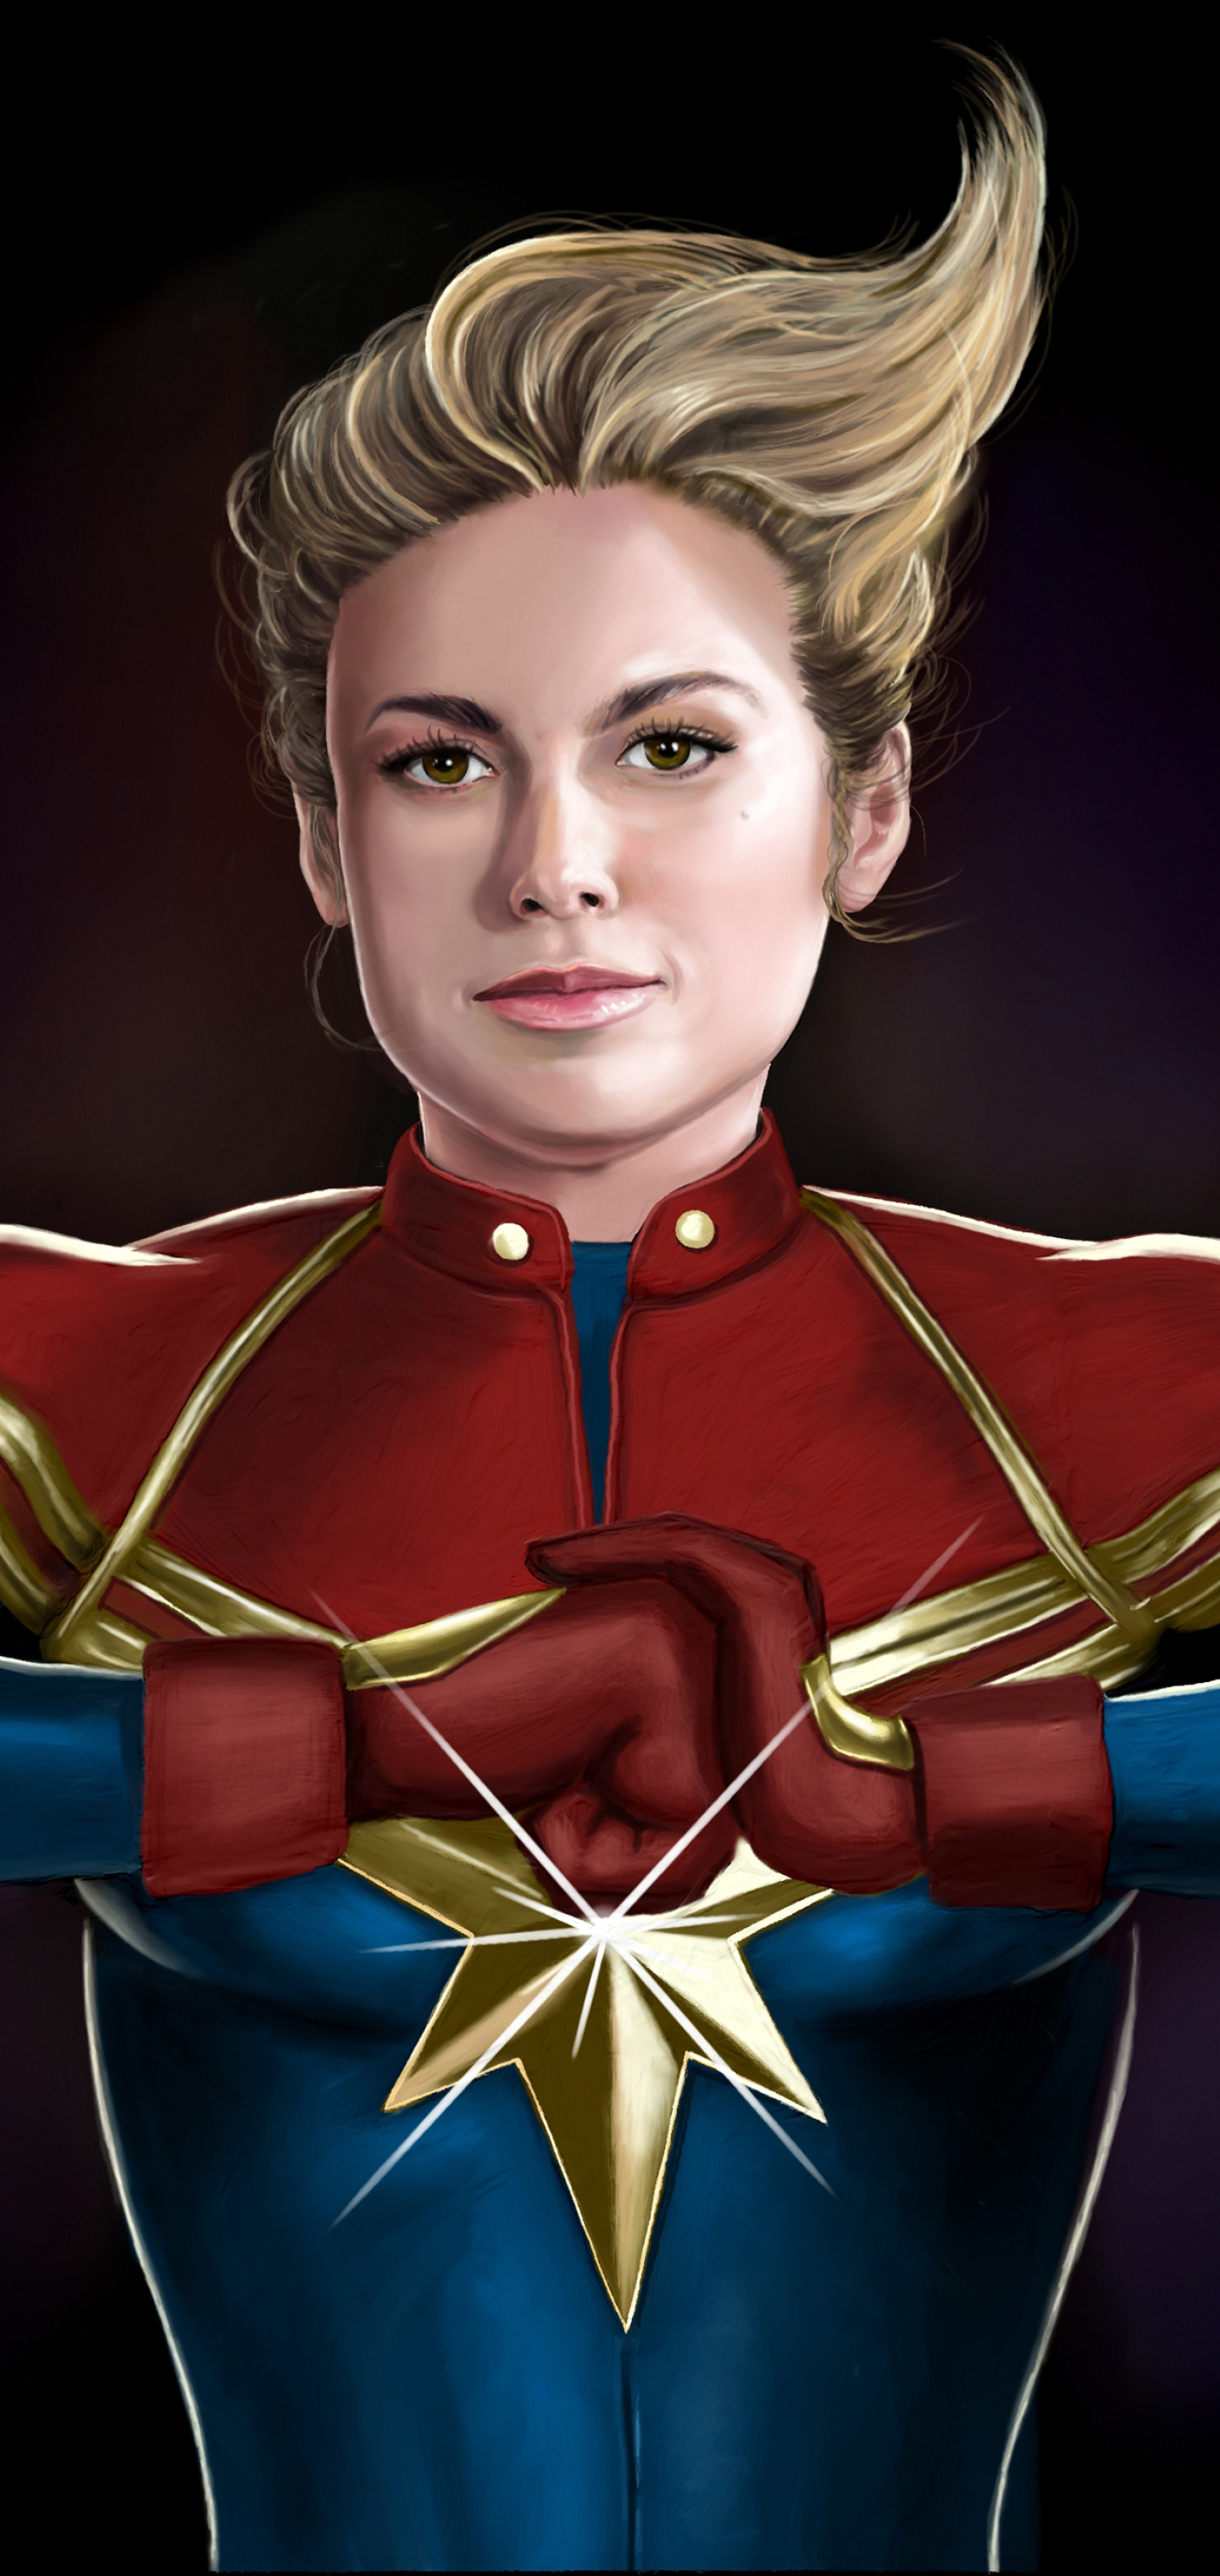 1440x3040 Brie Larson as Captain Marvel Illustration 1440x3040